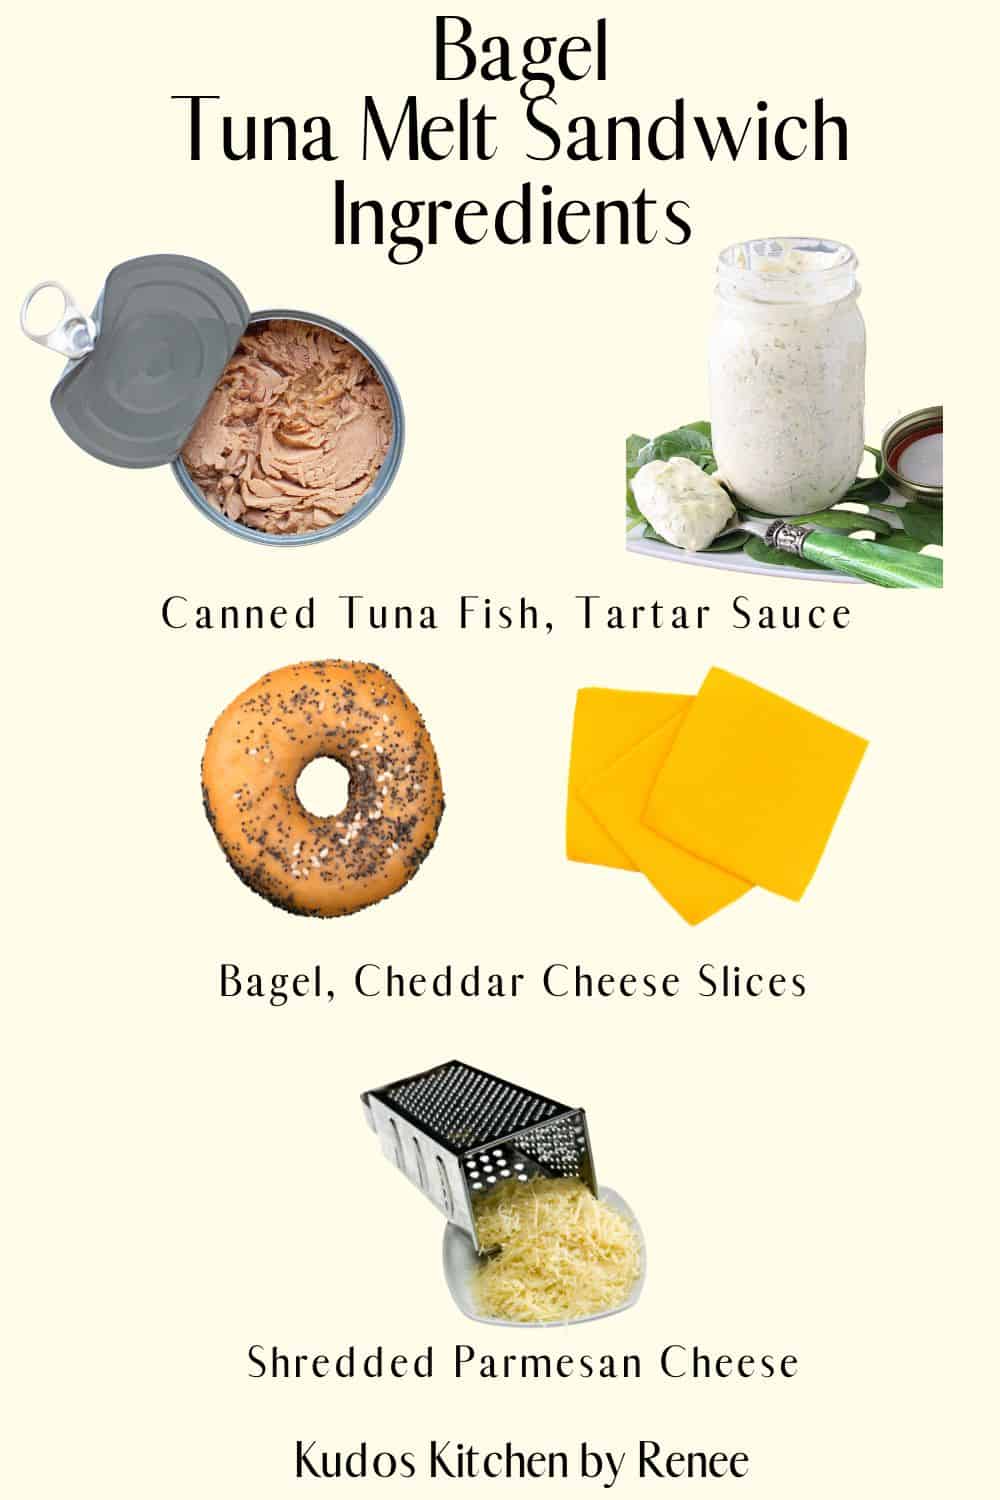 Ingredients for making a Bagel Tuna Melt Sandwich.